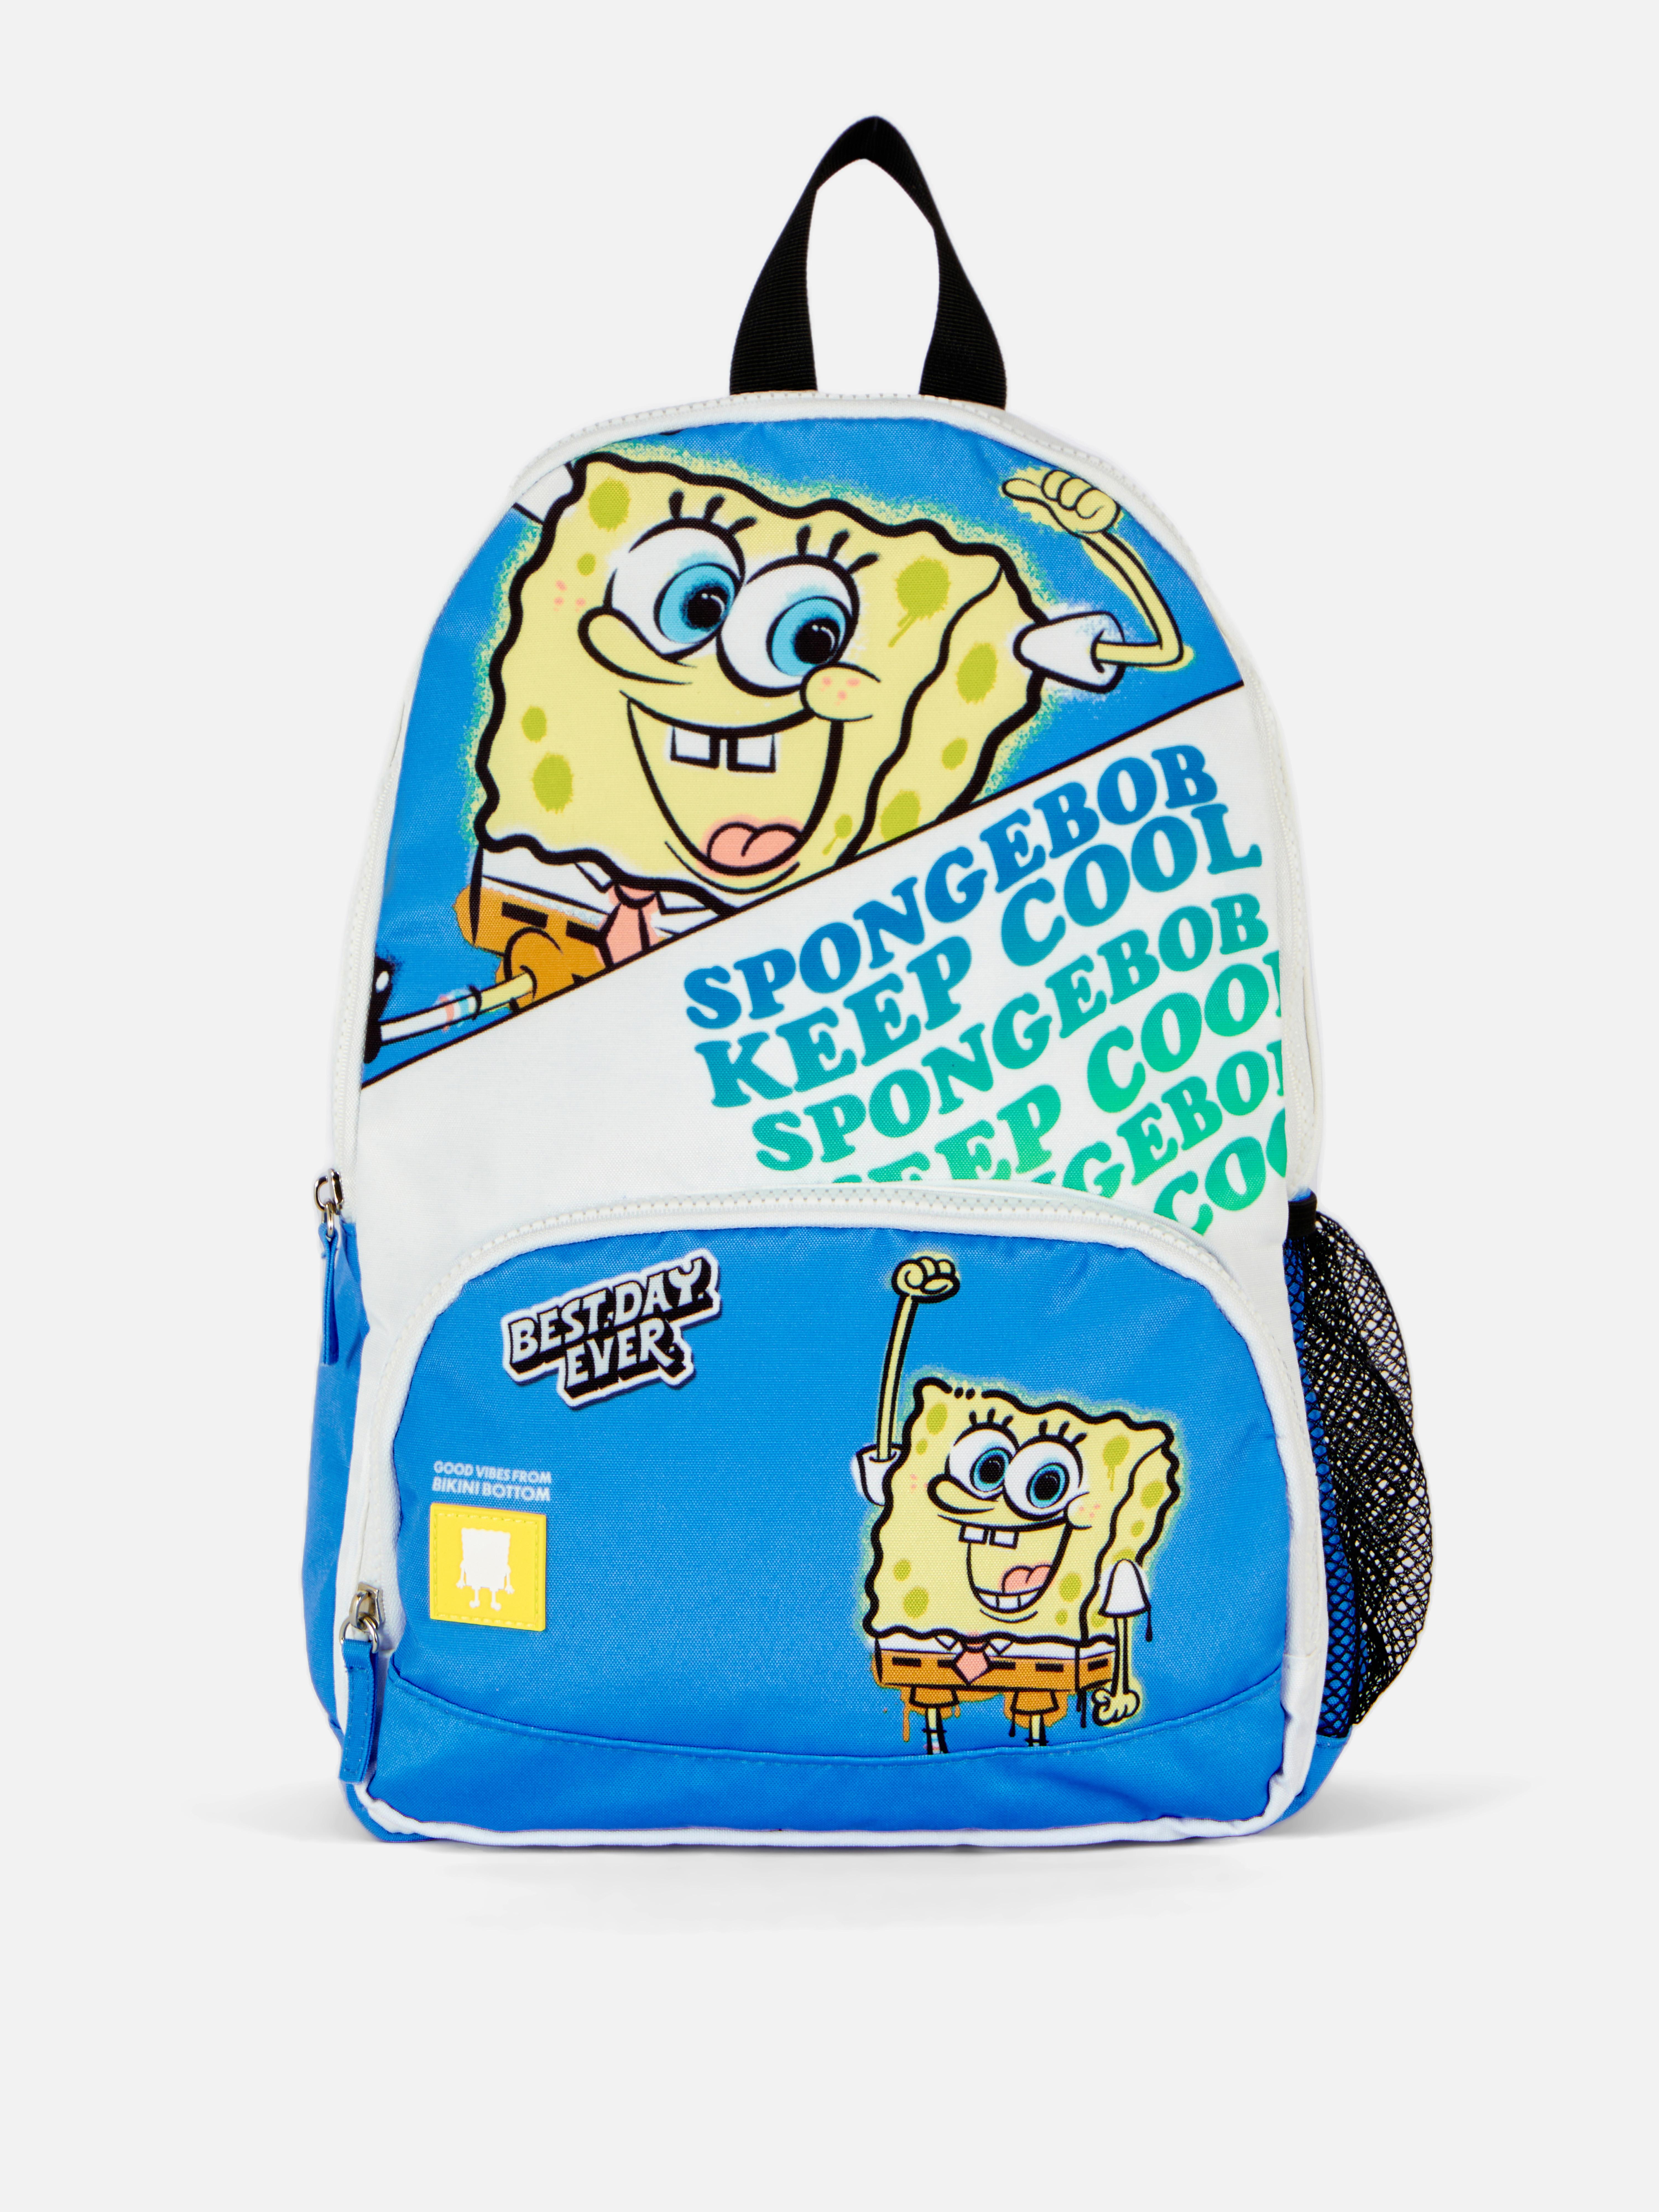 SpongeBob SquarePants Backpack